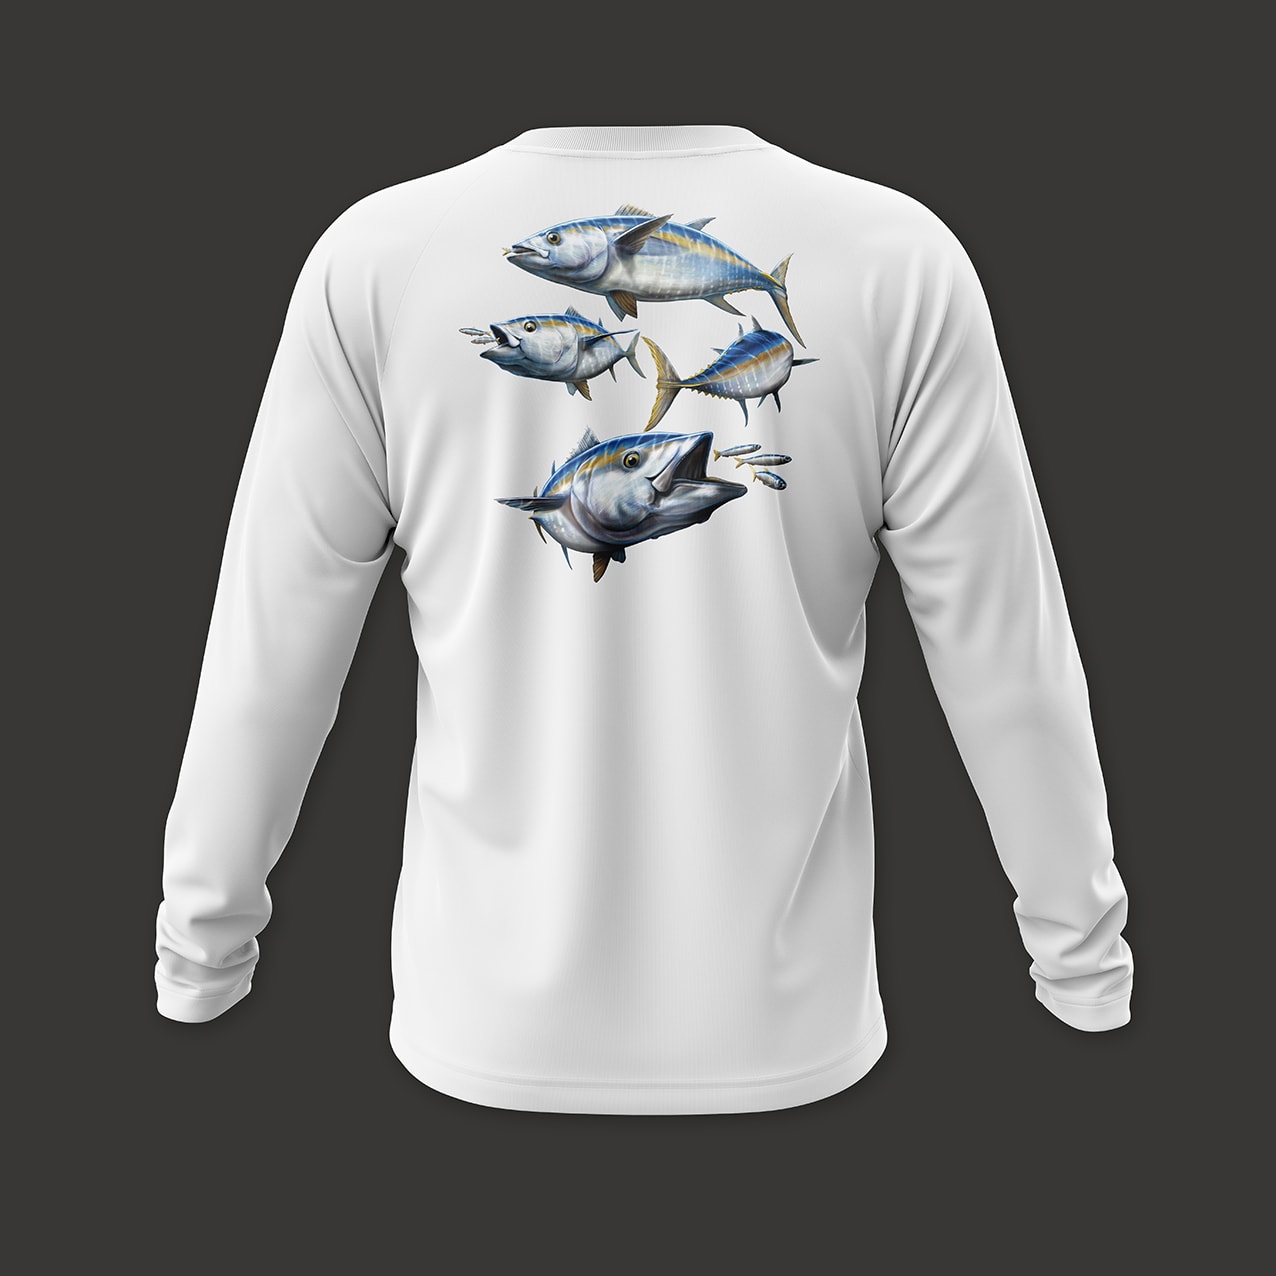 Crea obras de arte de pintura digital para tu camiseta de pesca.